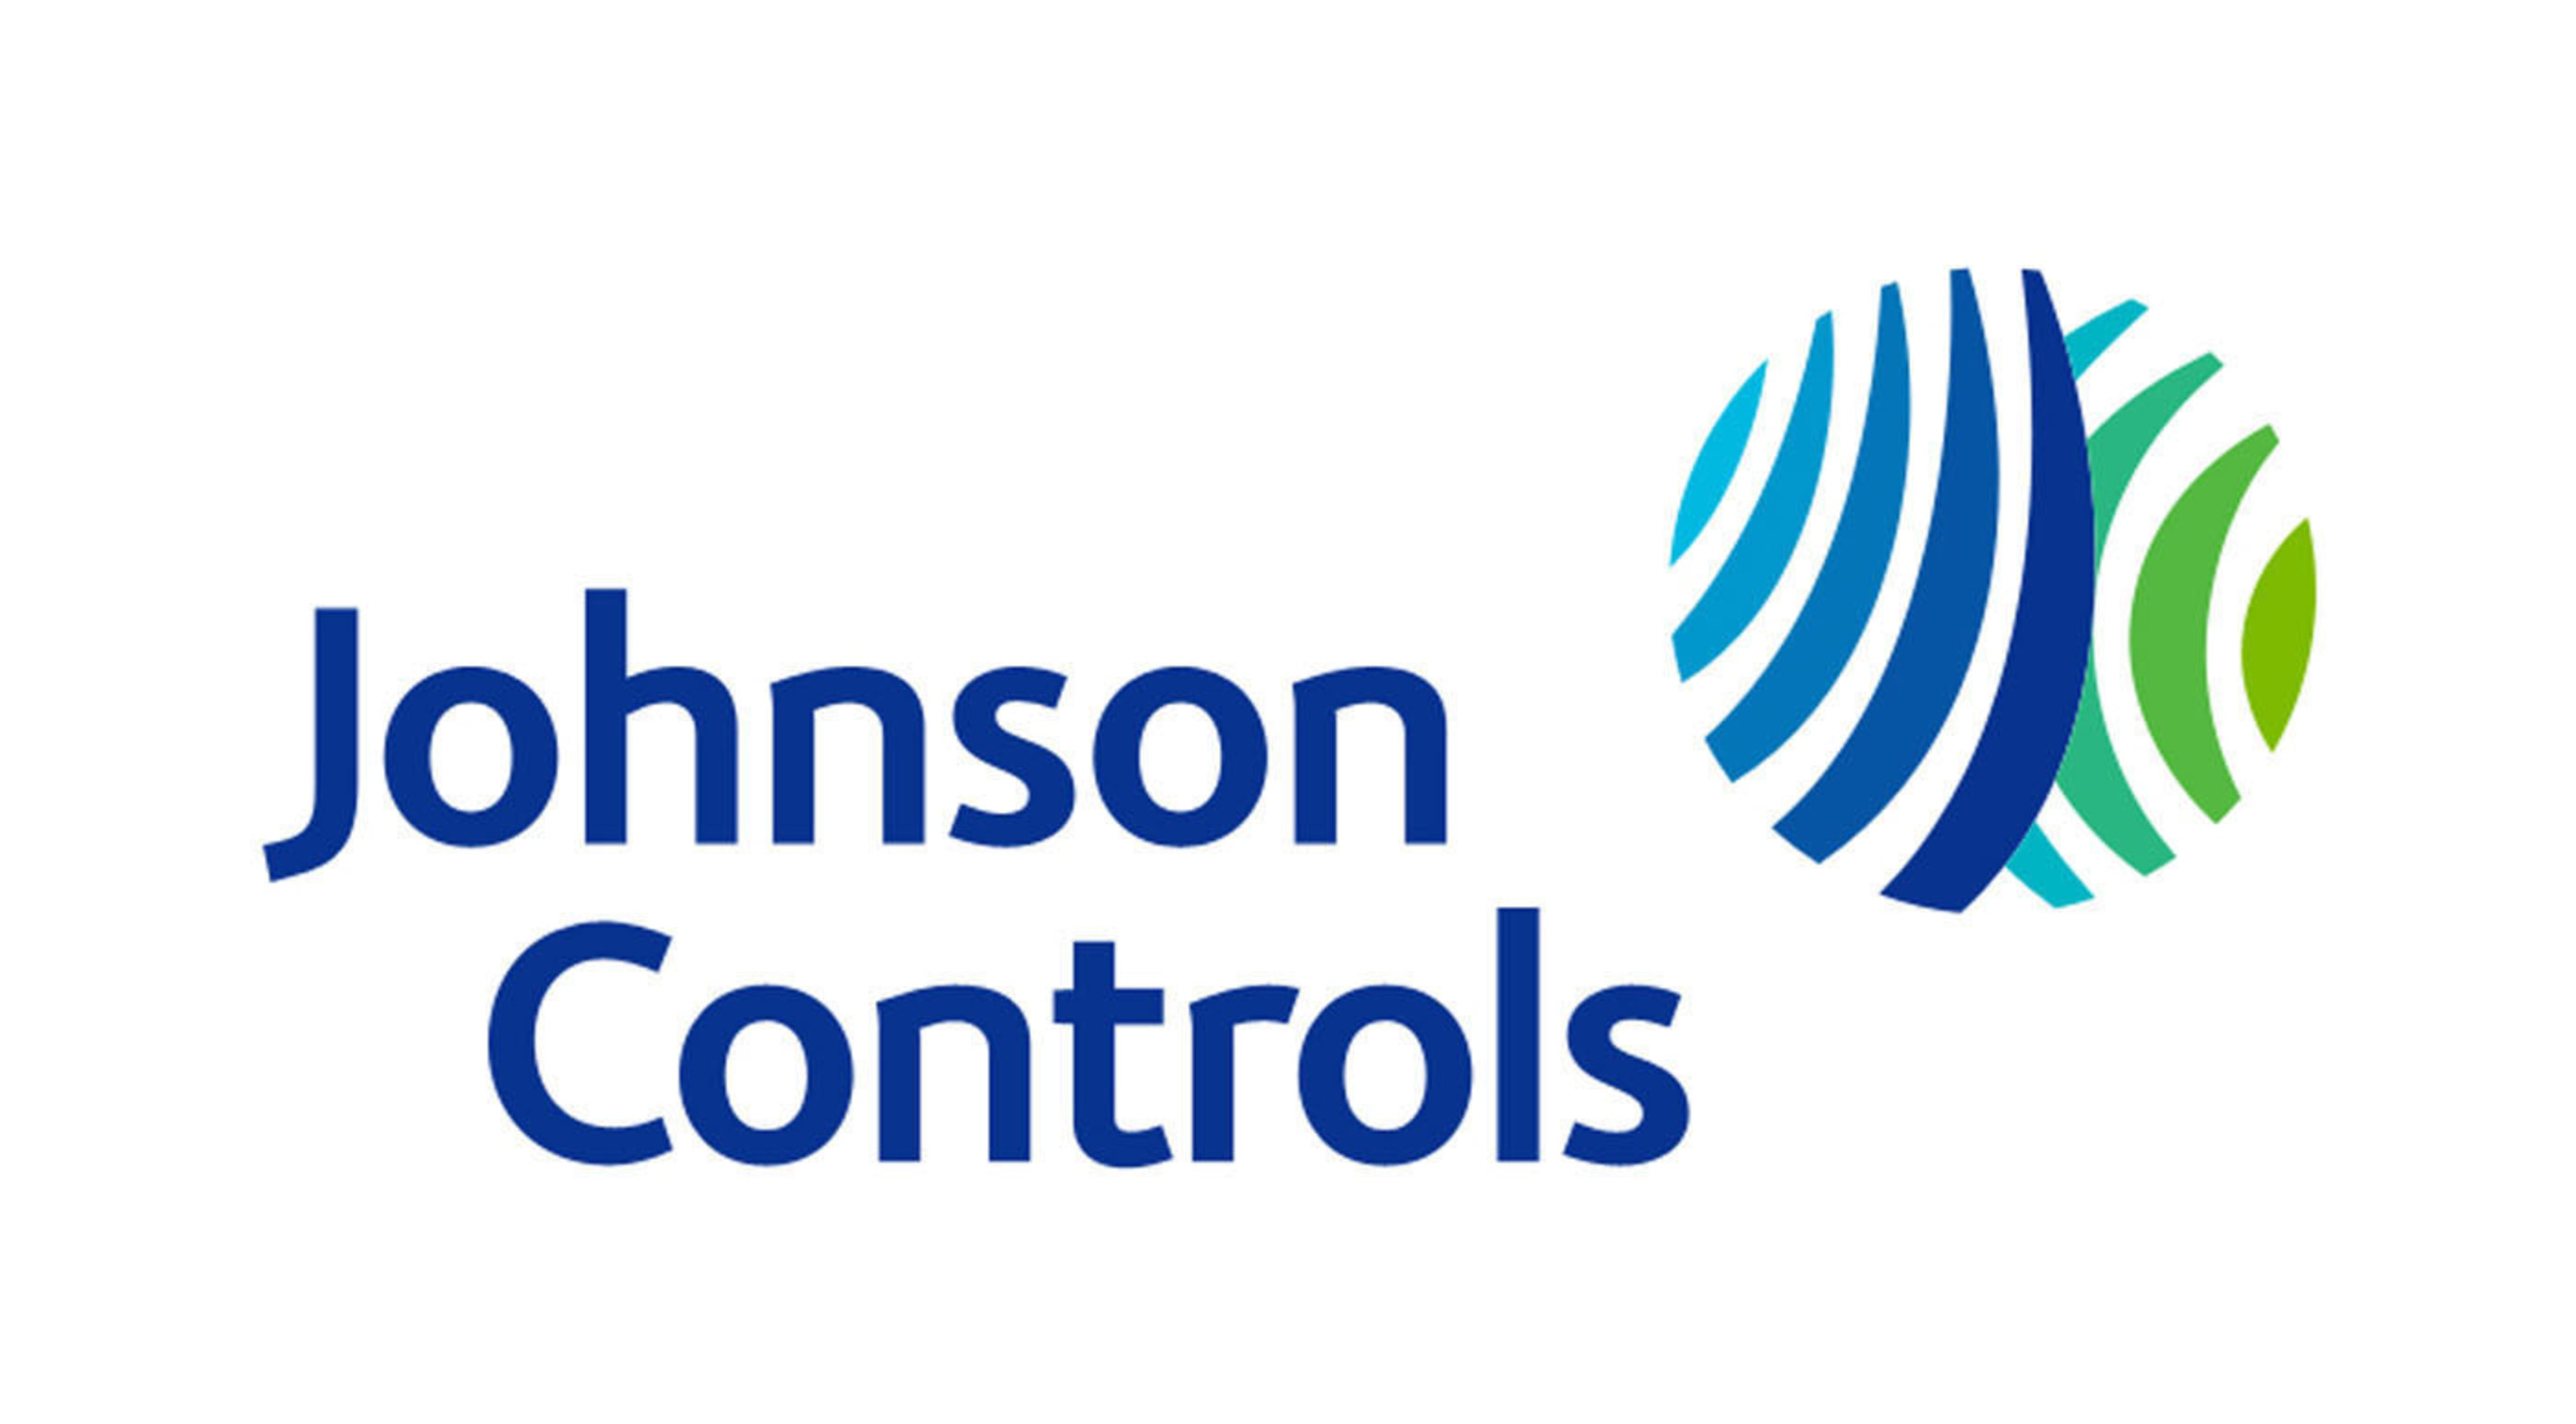 Johnson Controls logo. (PRNewsFoto/Johnson Controls)